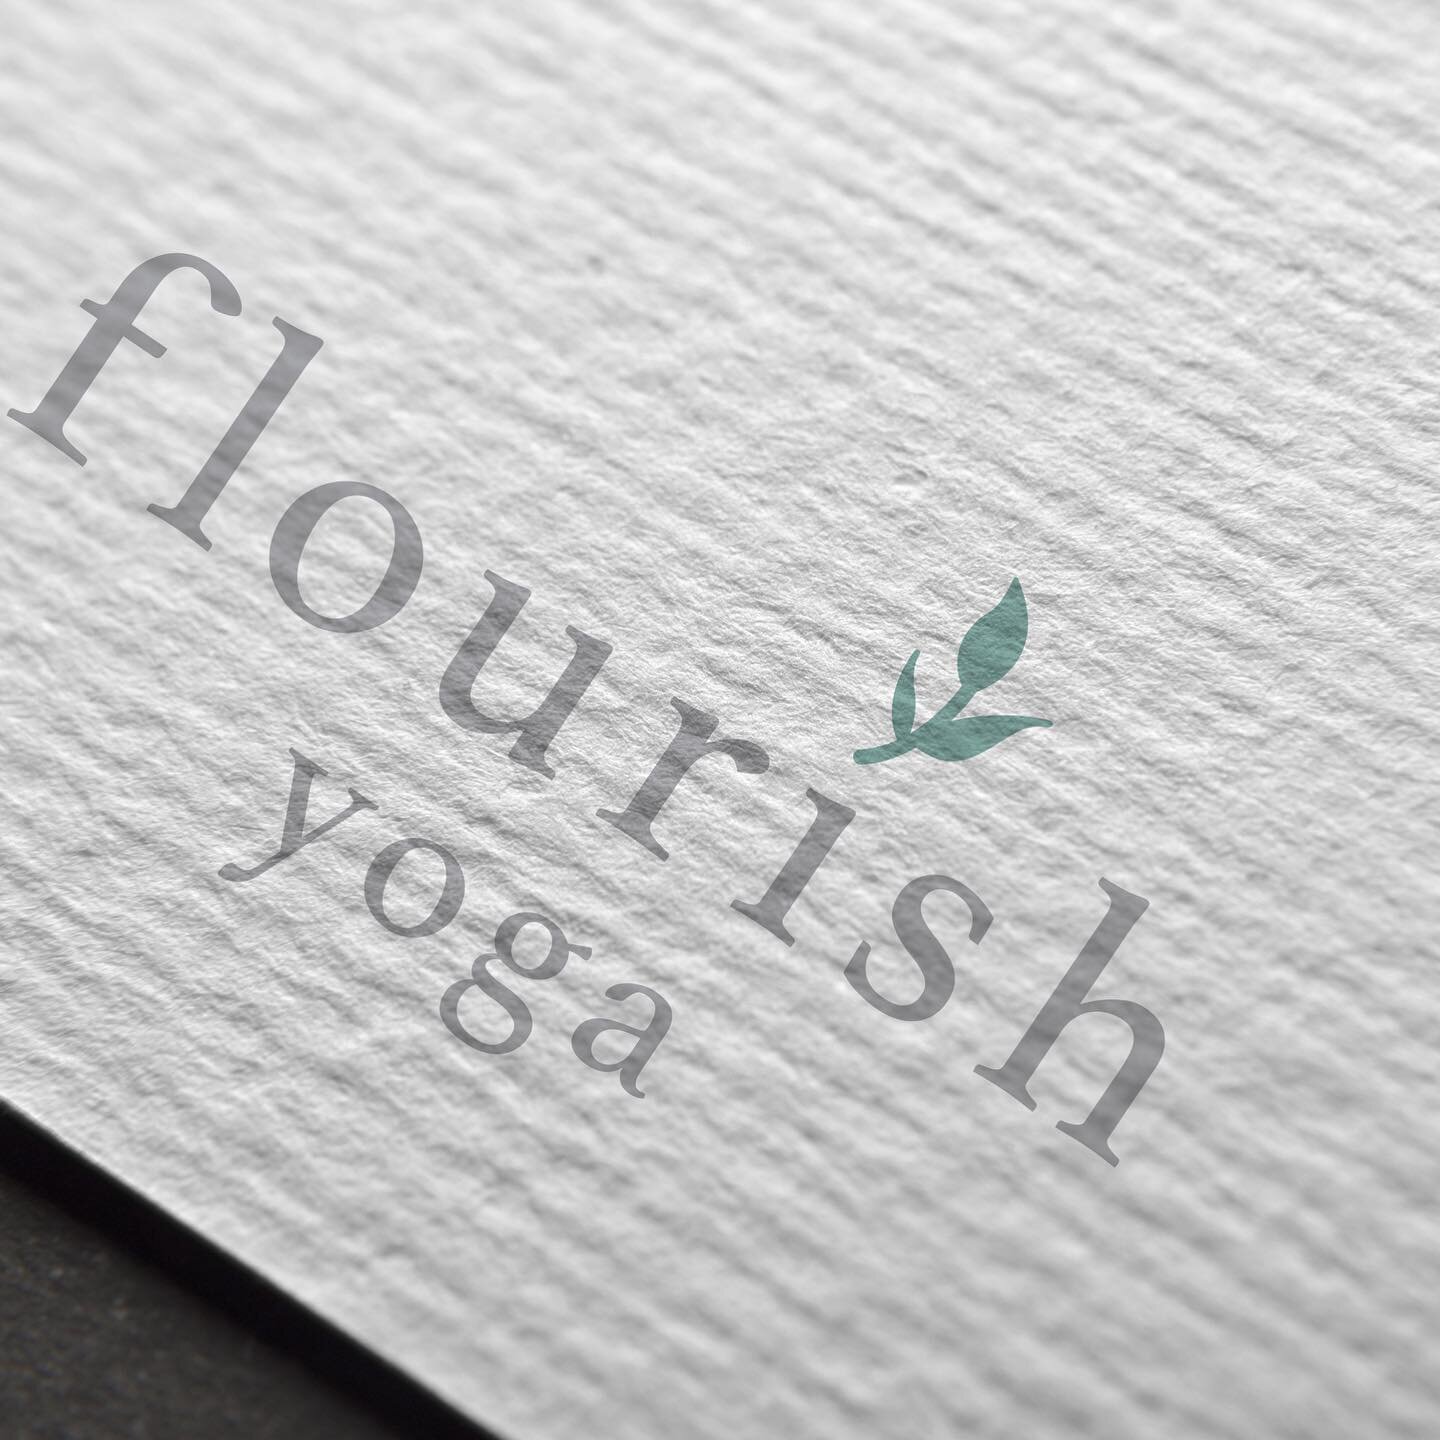 @flourishyoganz branding visuals &amp; print concepts 🌱 
#graphicdesign #branding #brandingdesign #yoga #brandidentity #flourishyoganz #graphicdesigner #typography #flourish